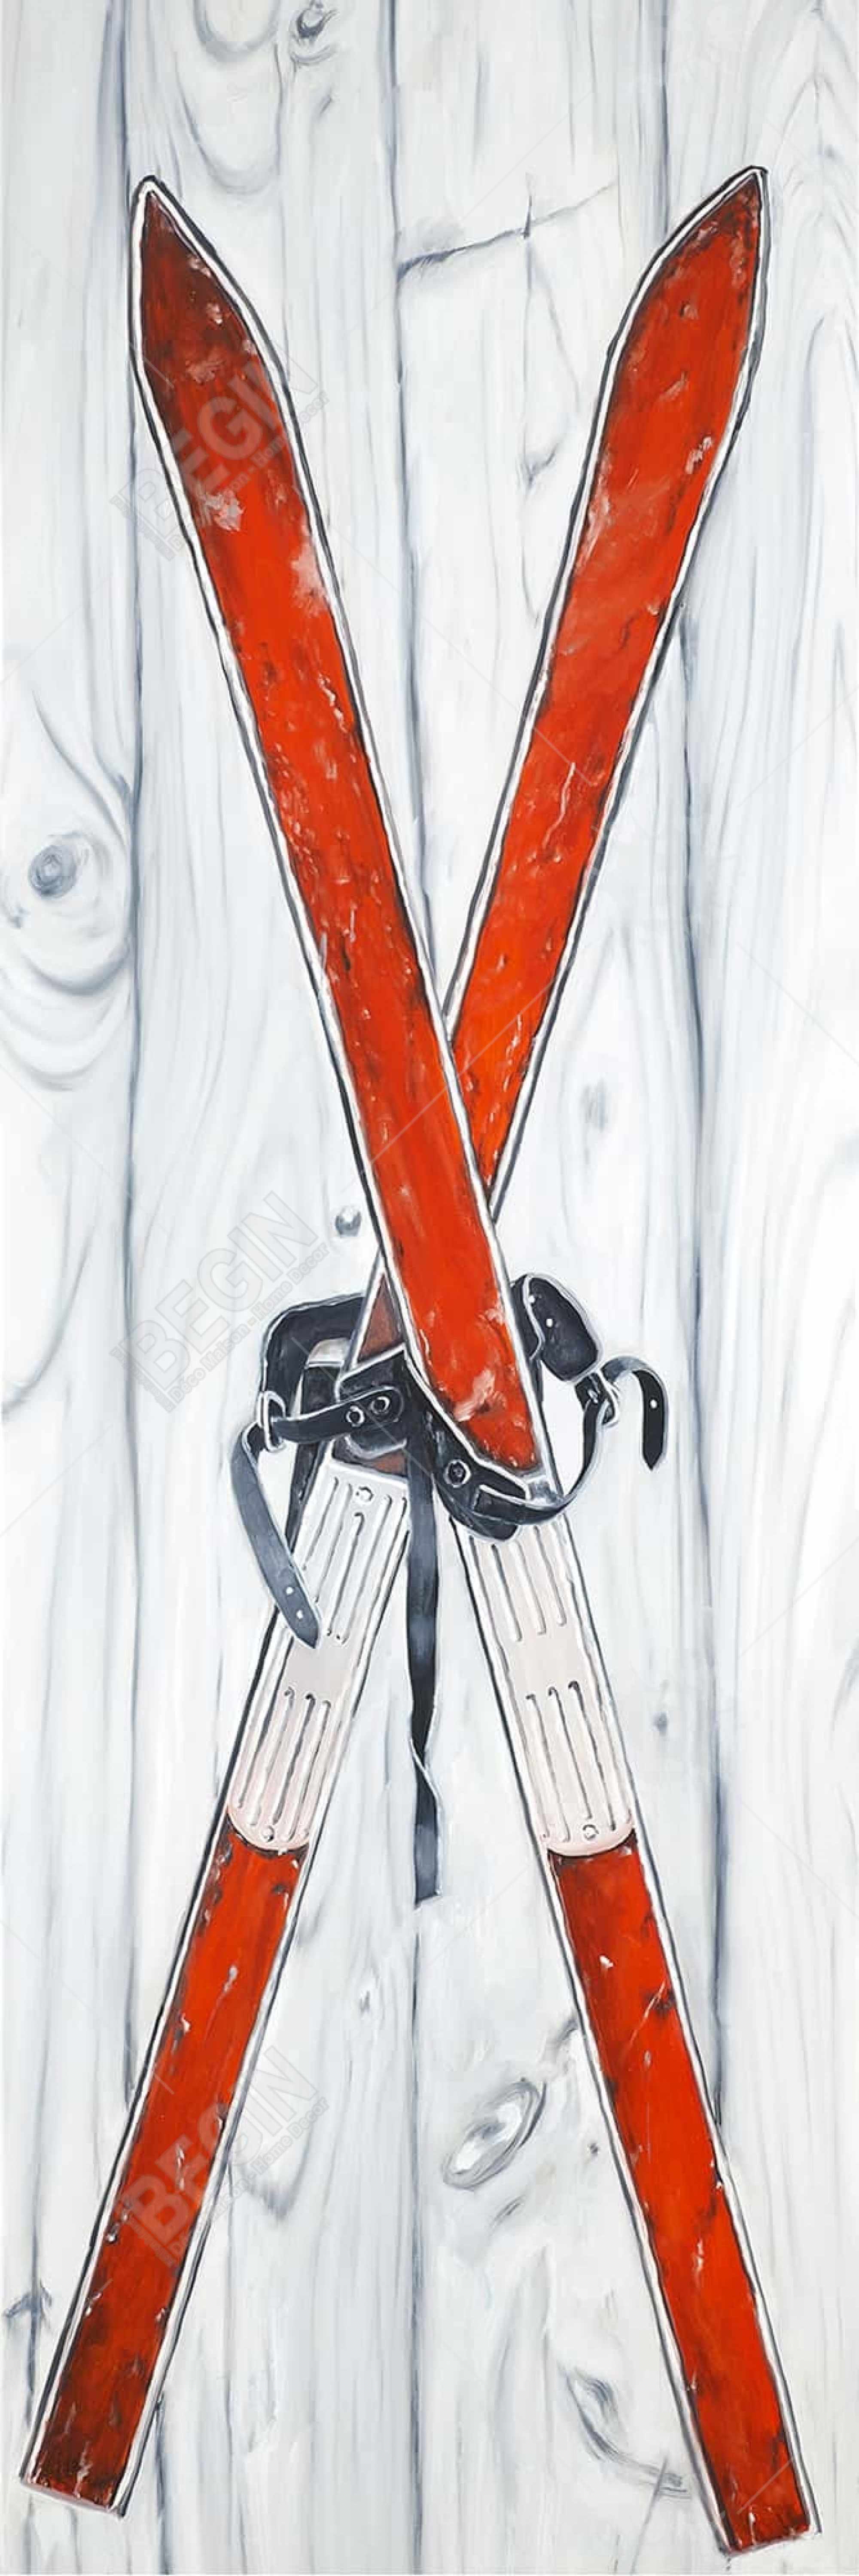 Skis rouges vintage